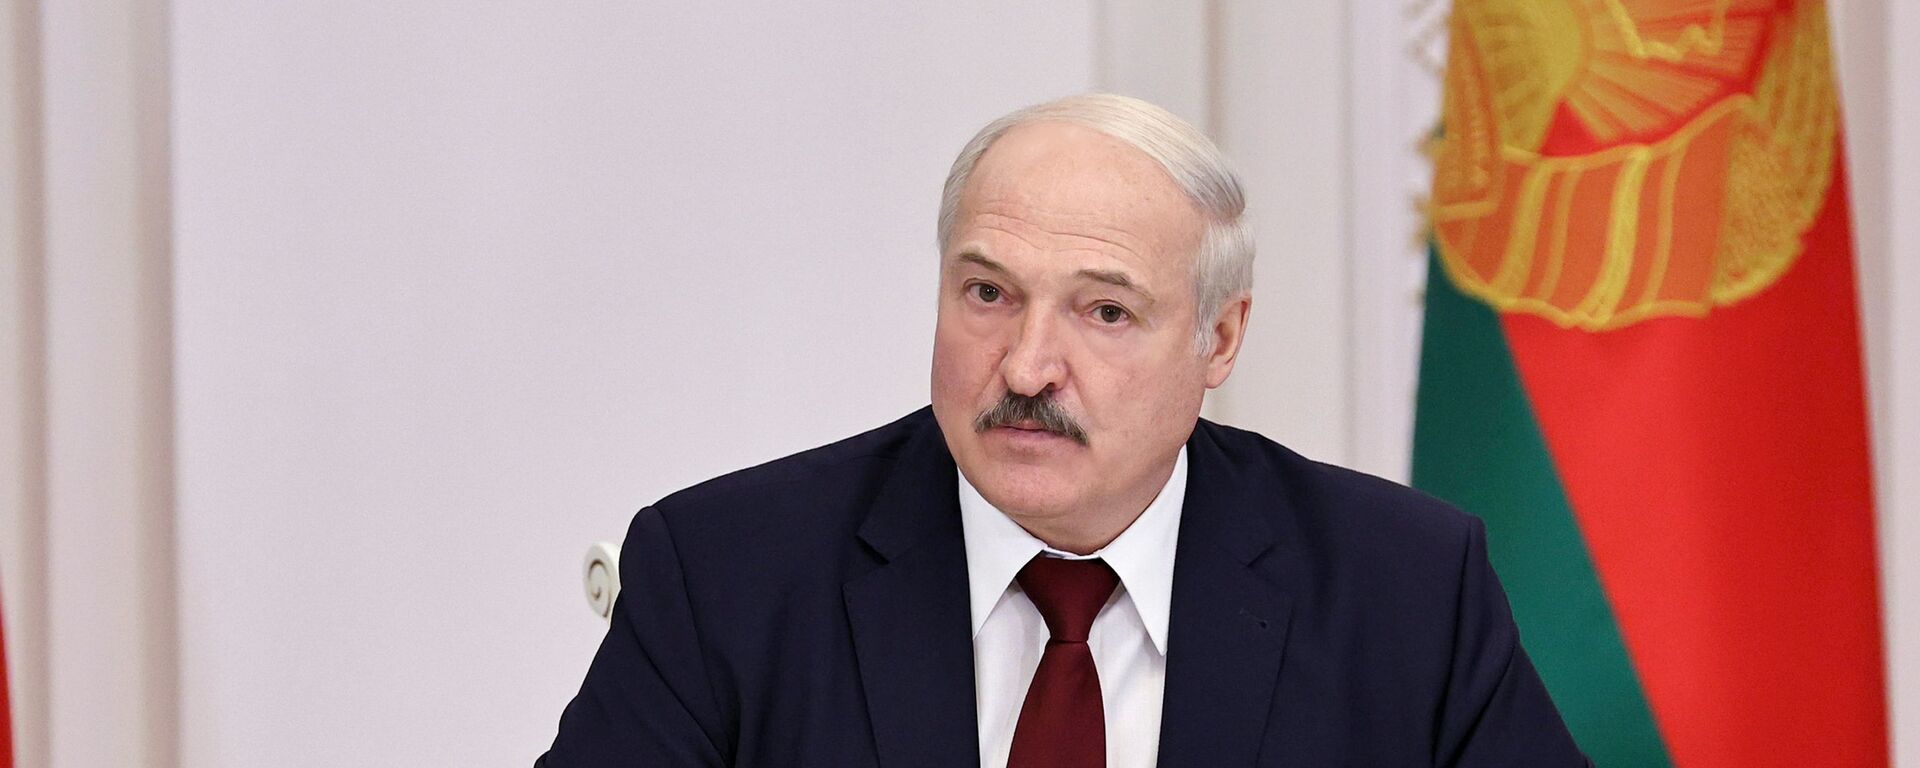 Baltarusijos prezidentas Aleksandras Lukašenka - Sputnik Lietuva, 1920, 26.05.2021